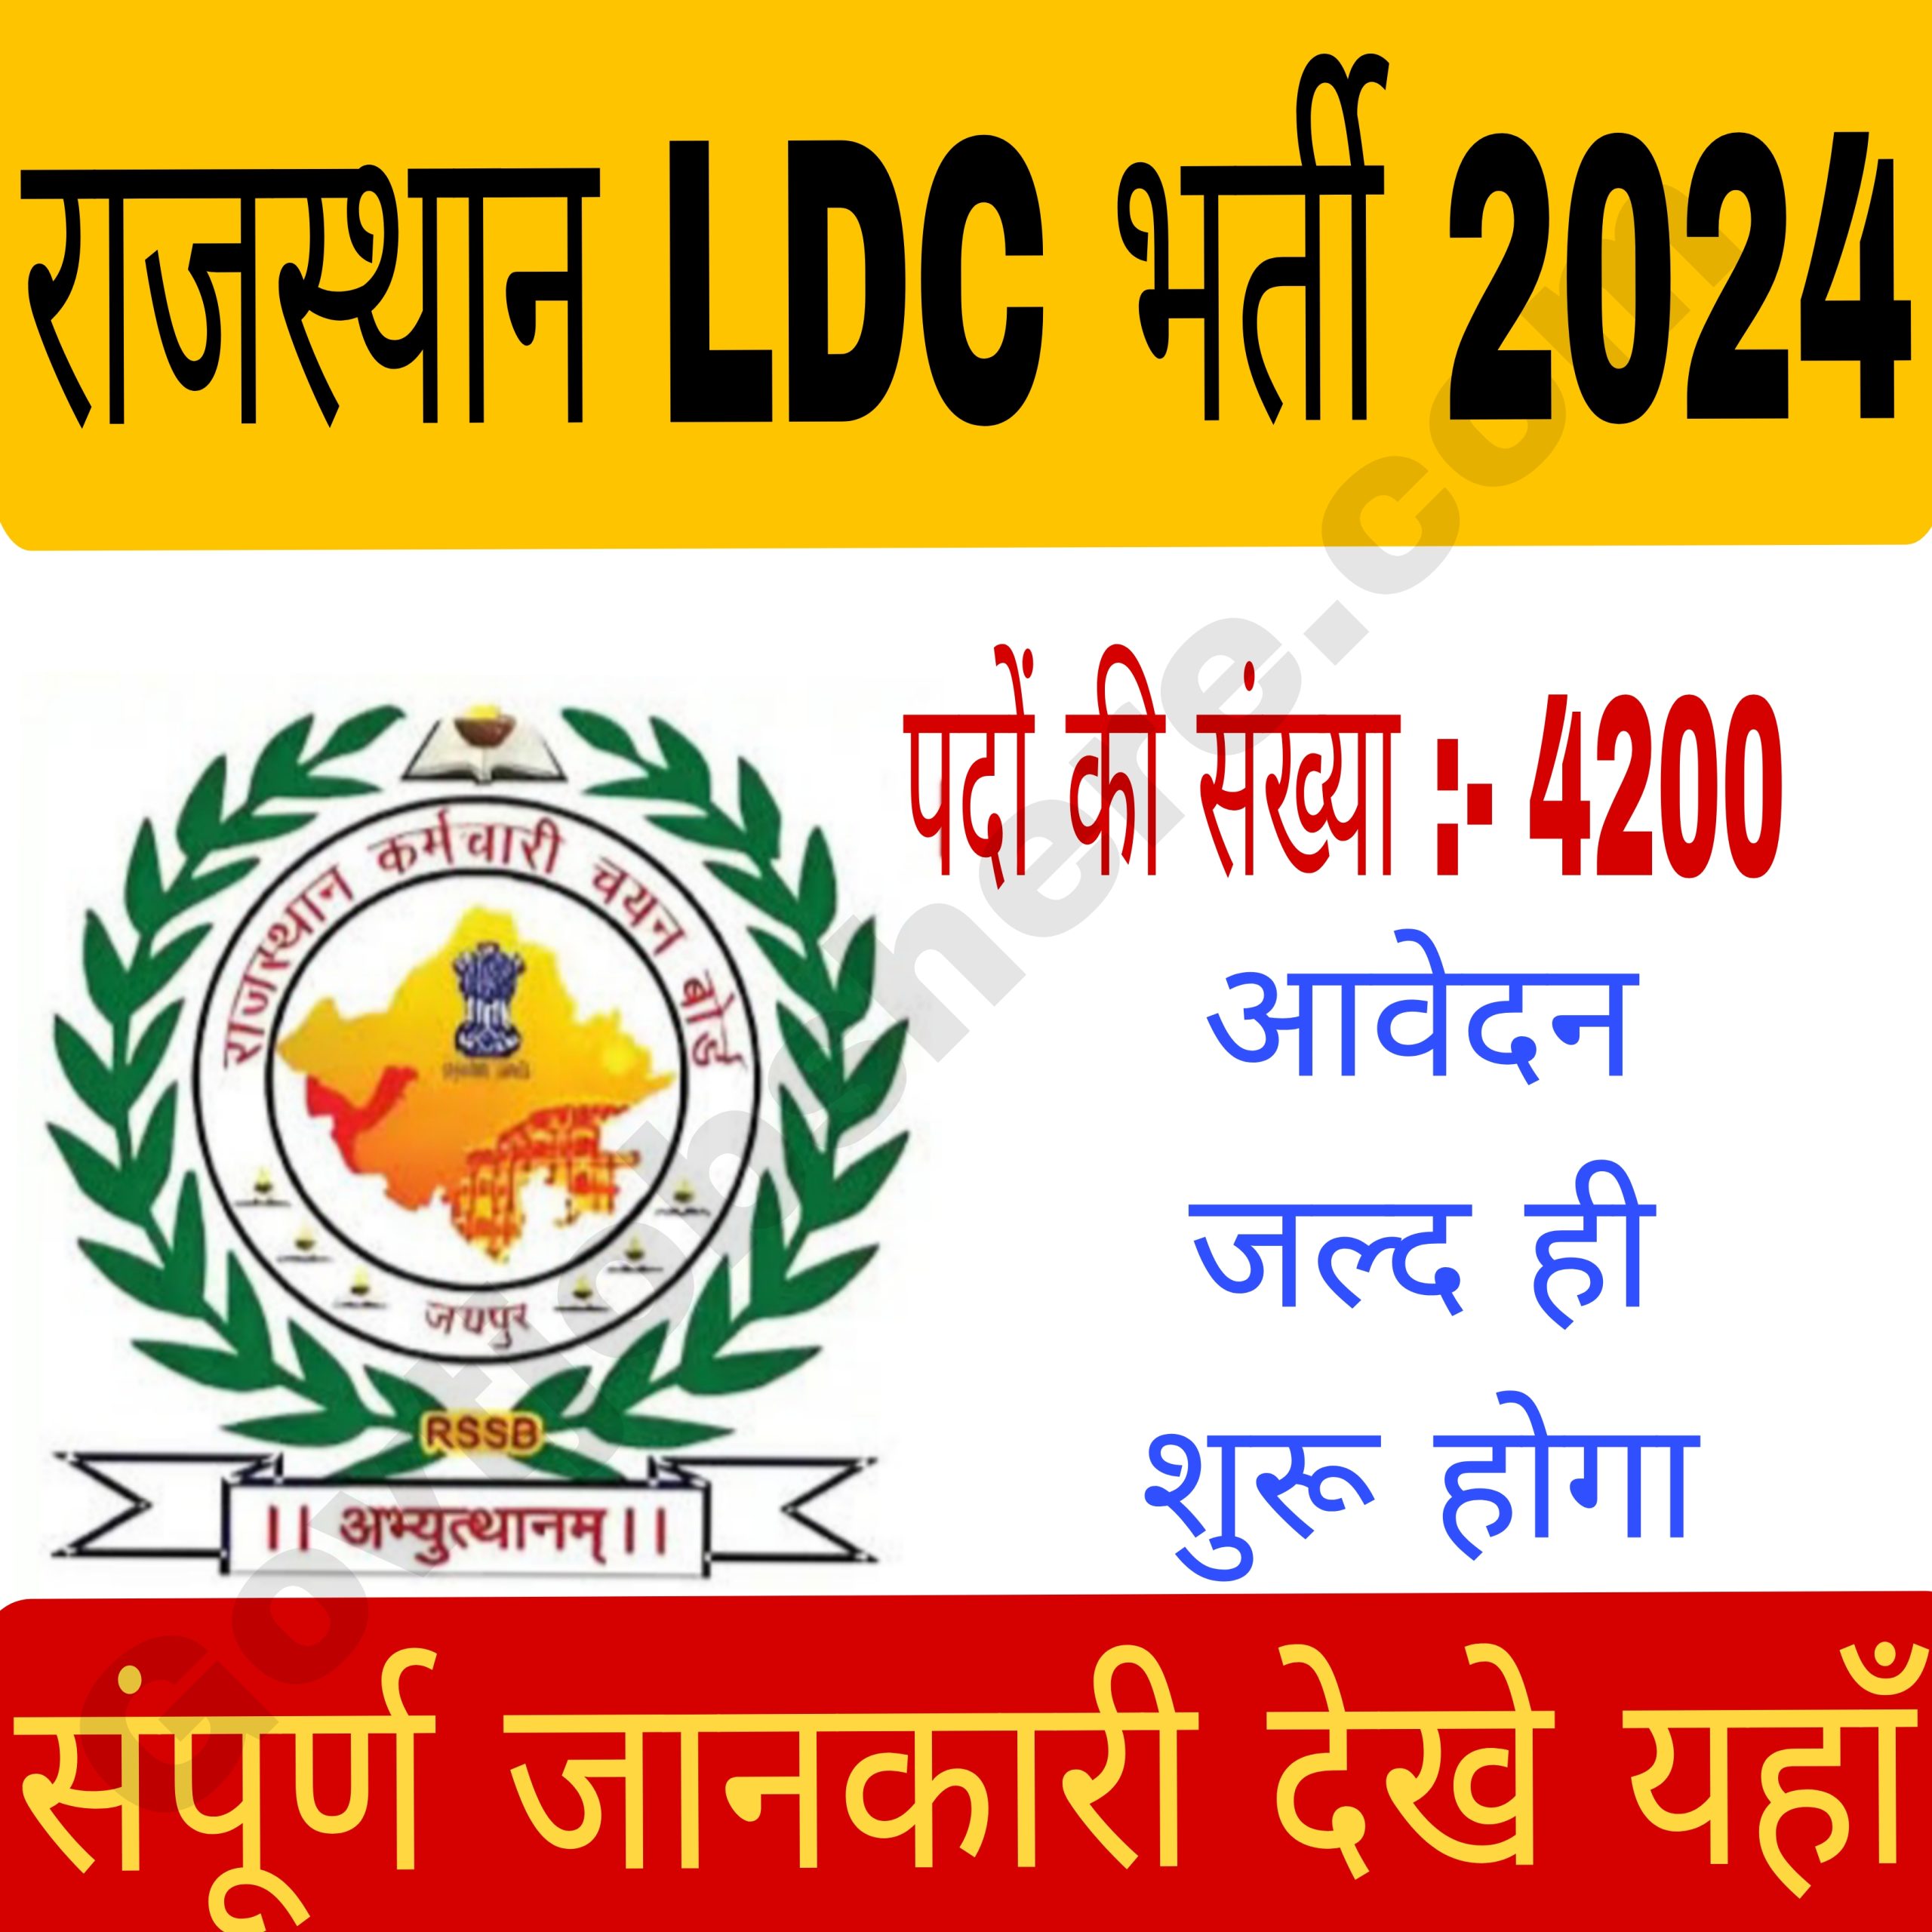 Rajasthan Ldc Recruitment 2024